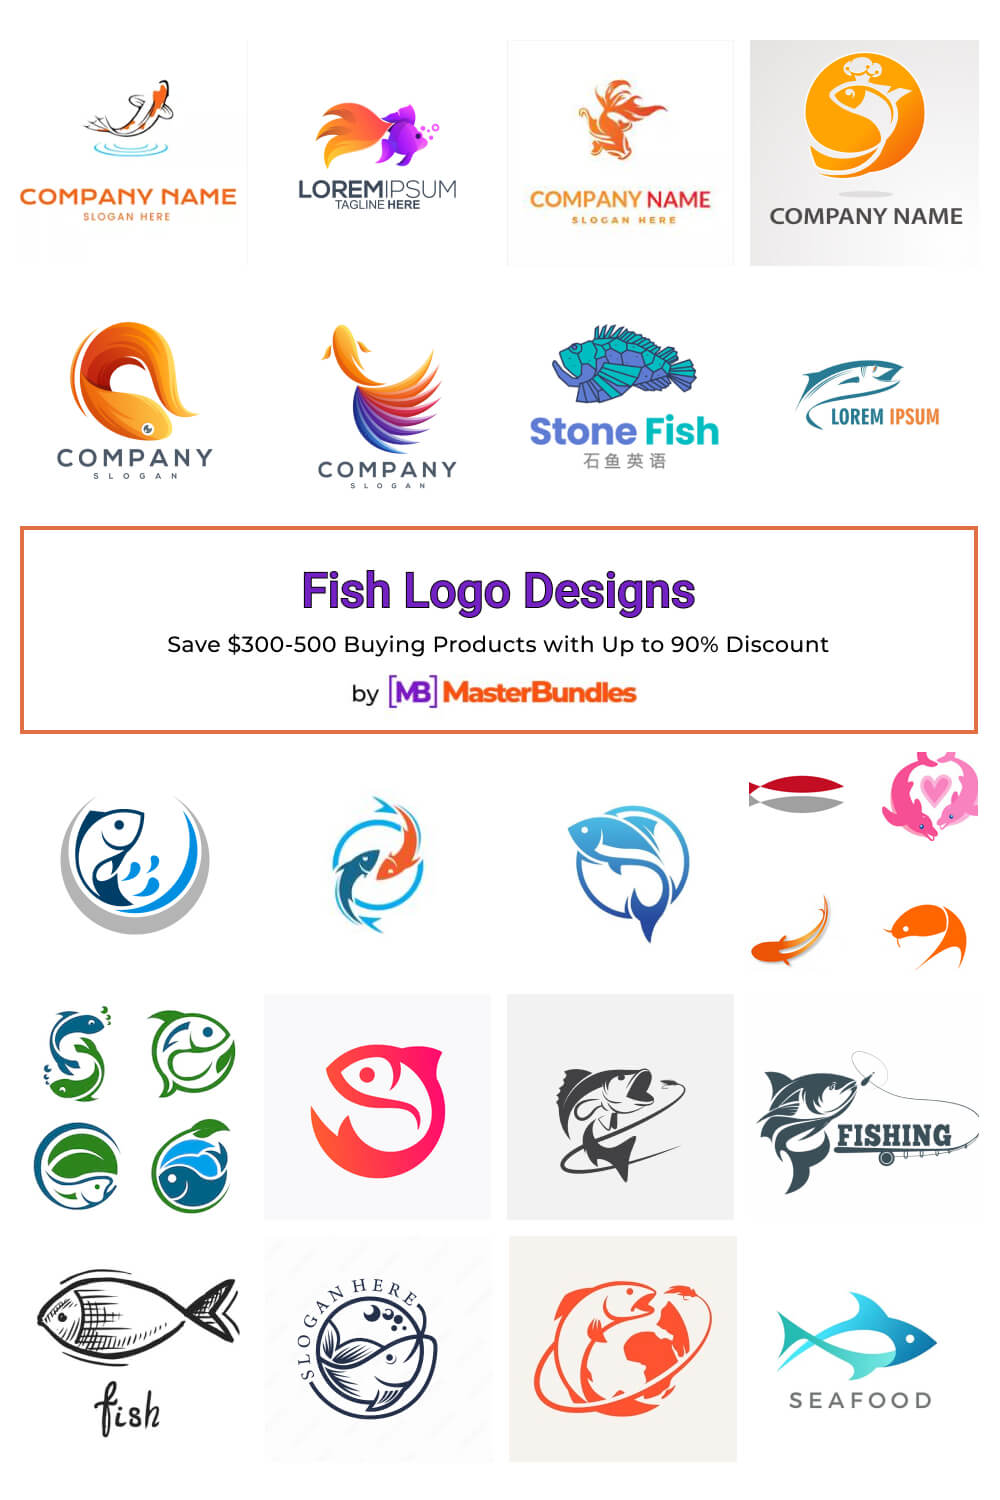 fish logo designs pinterest image.